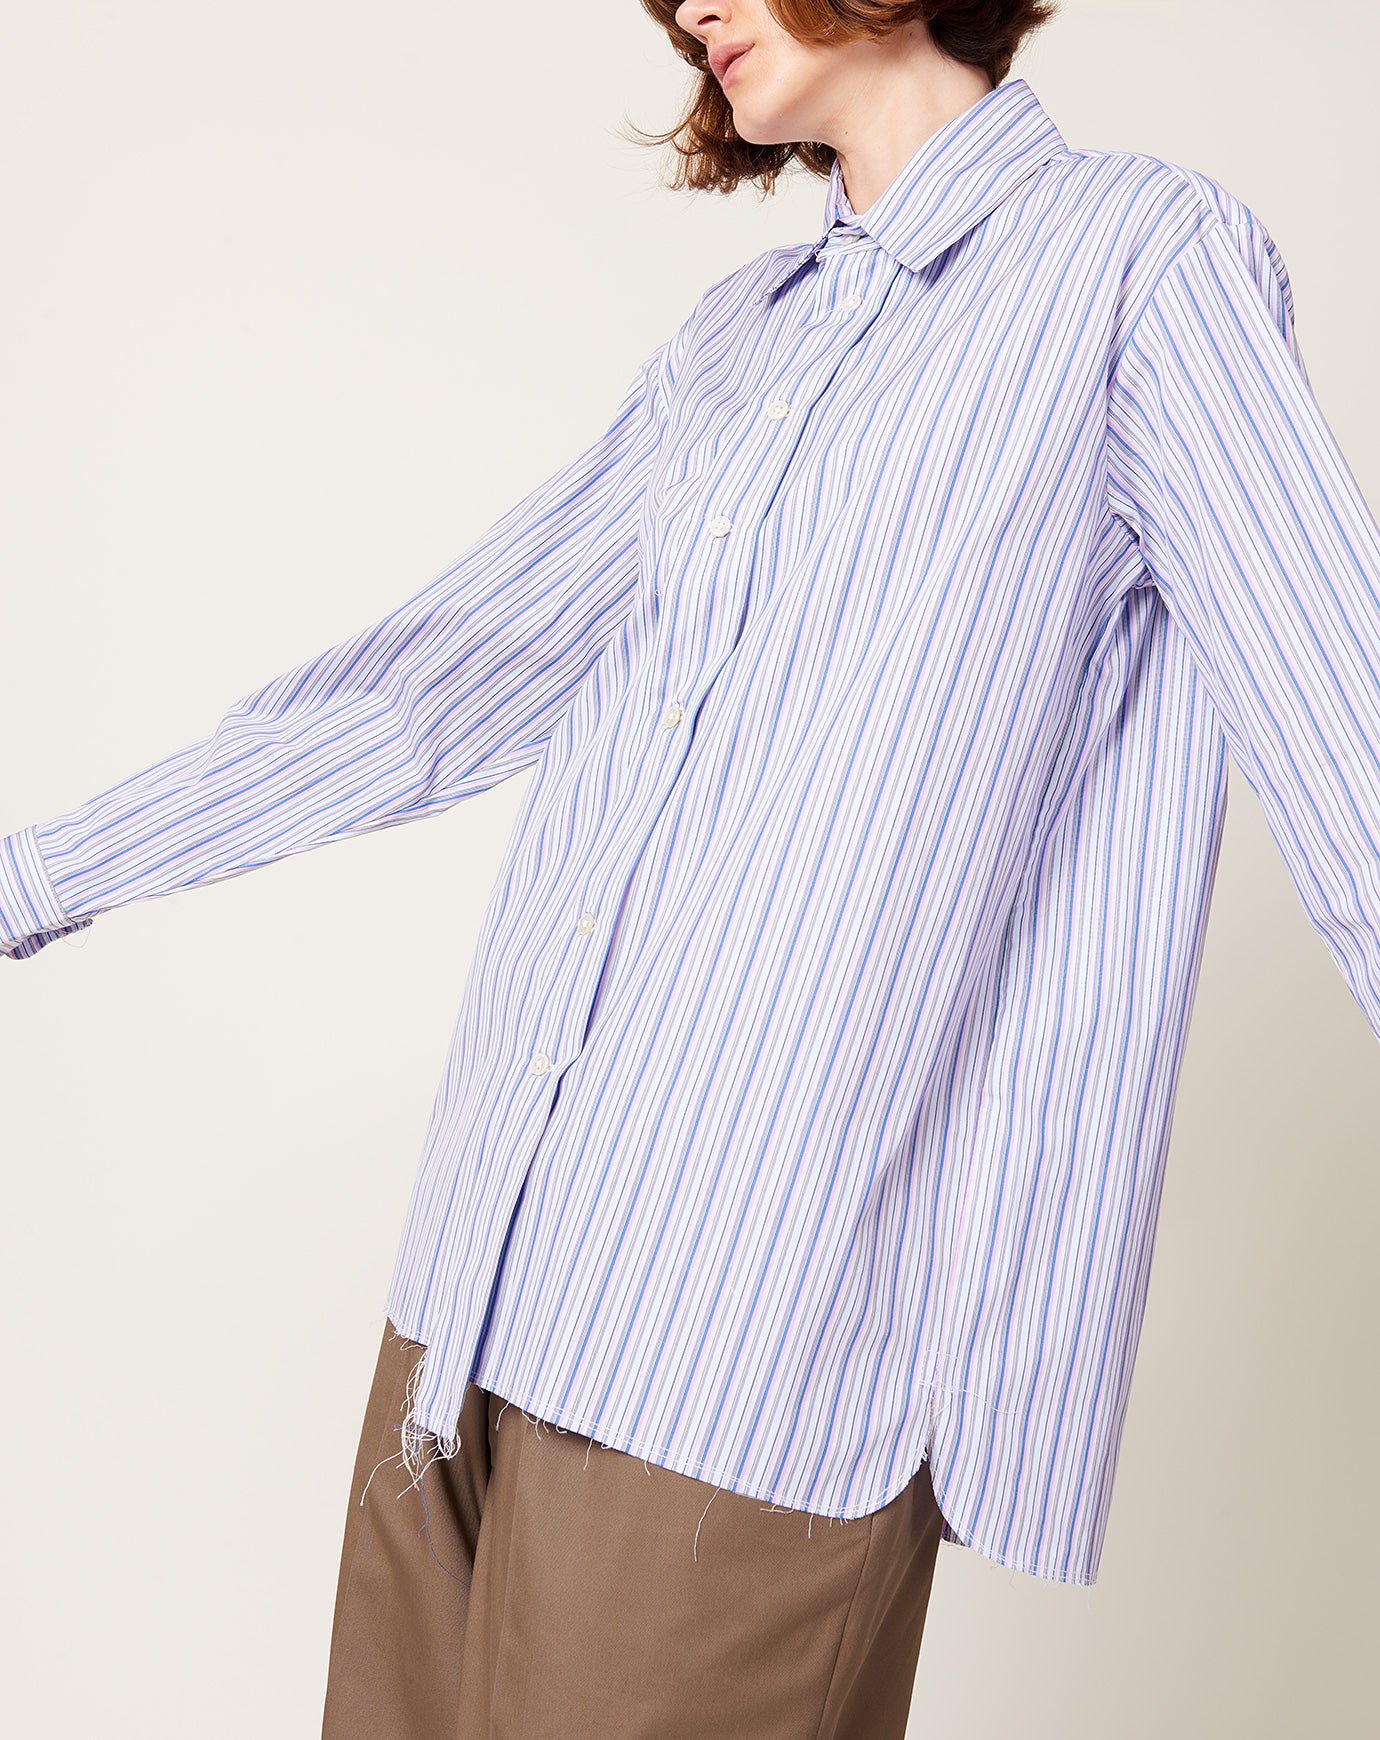 Camiel Fortgens Basic Shirt in Purple Stripe